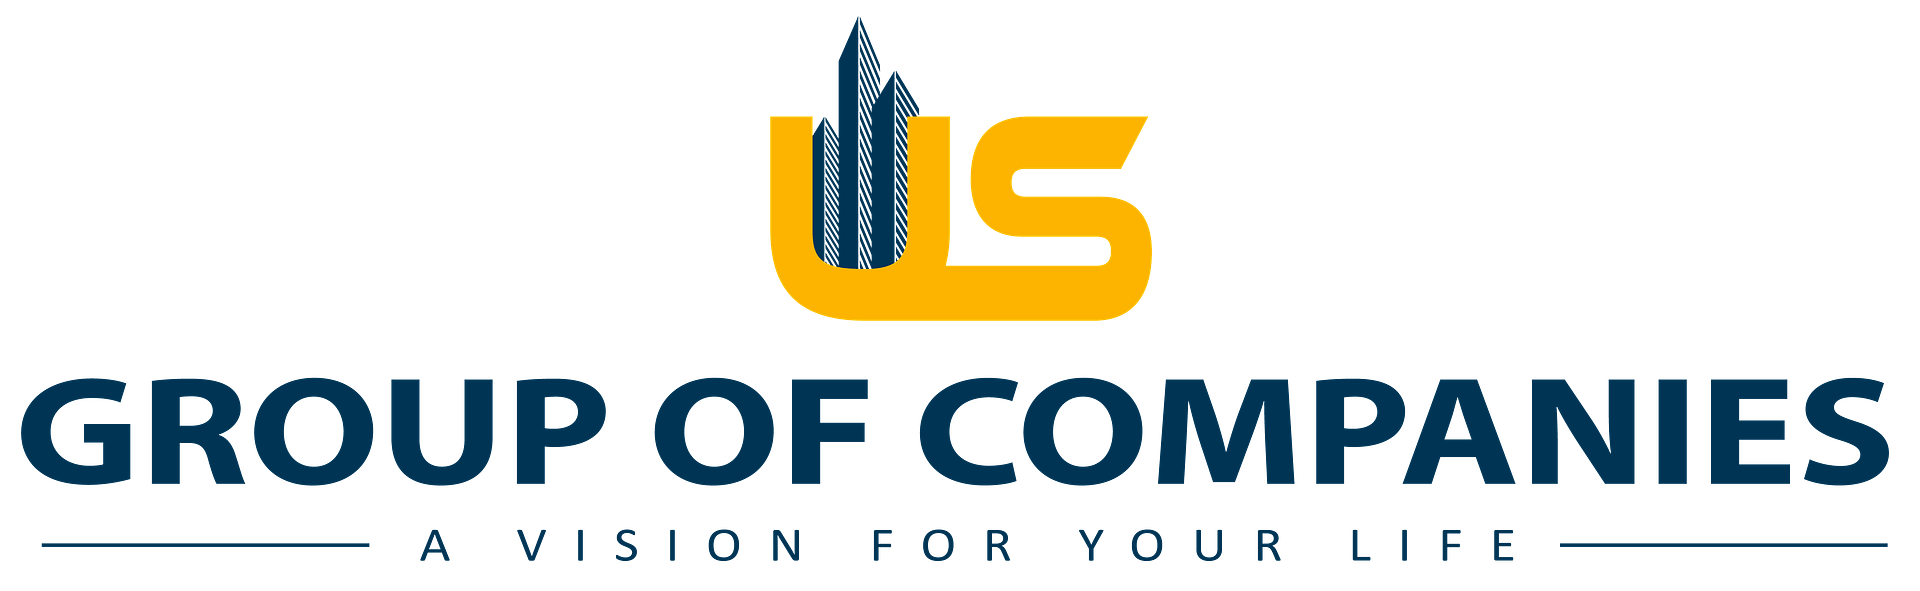 US Group of Companies logo